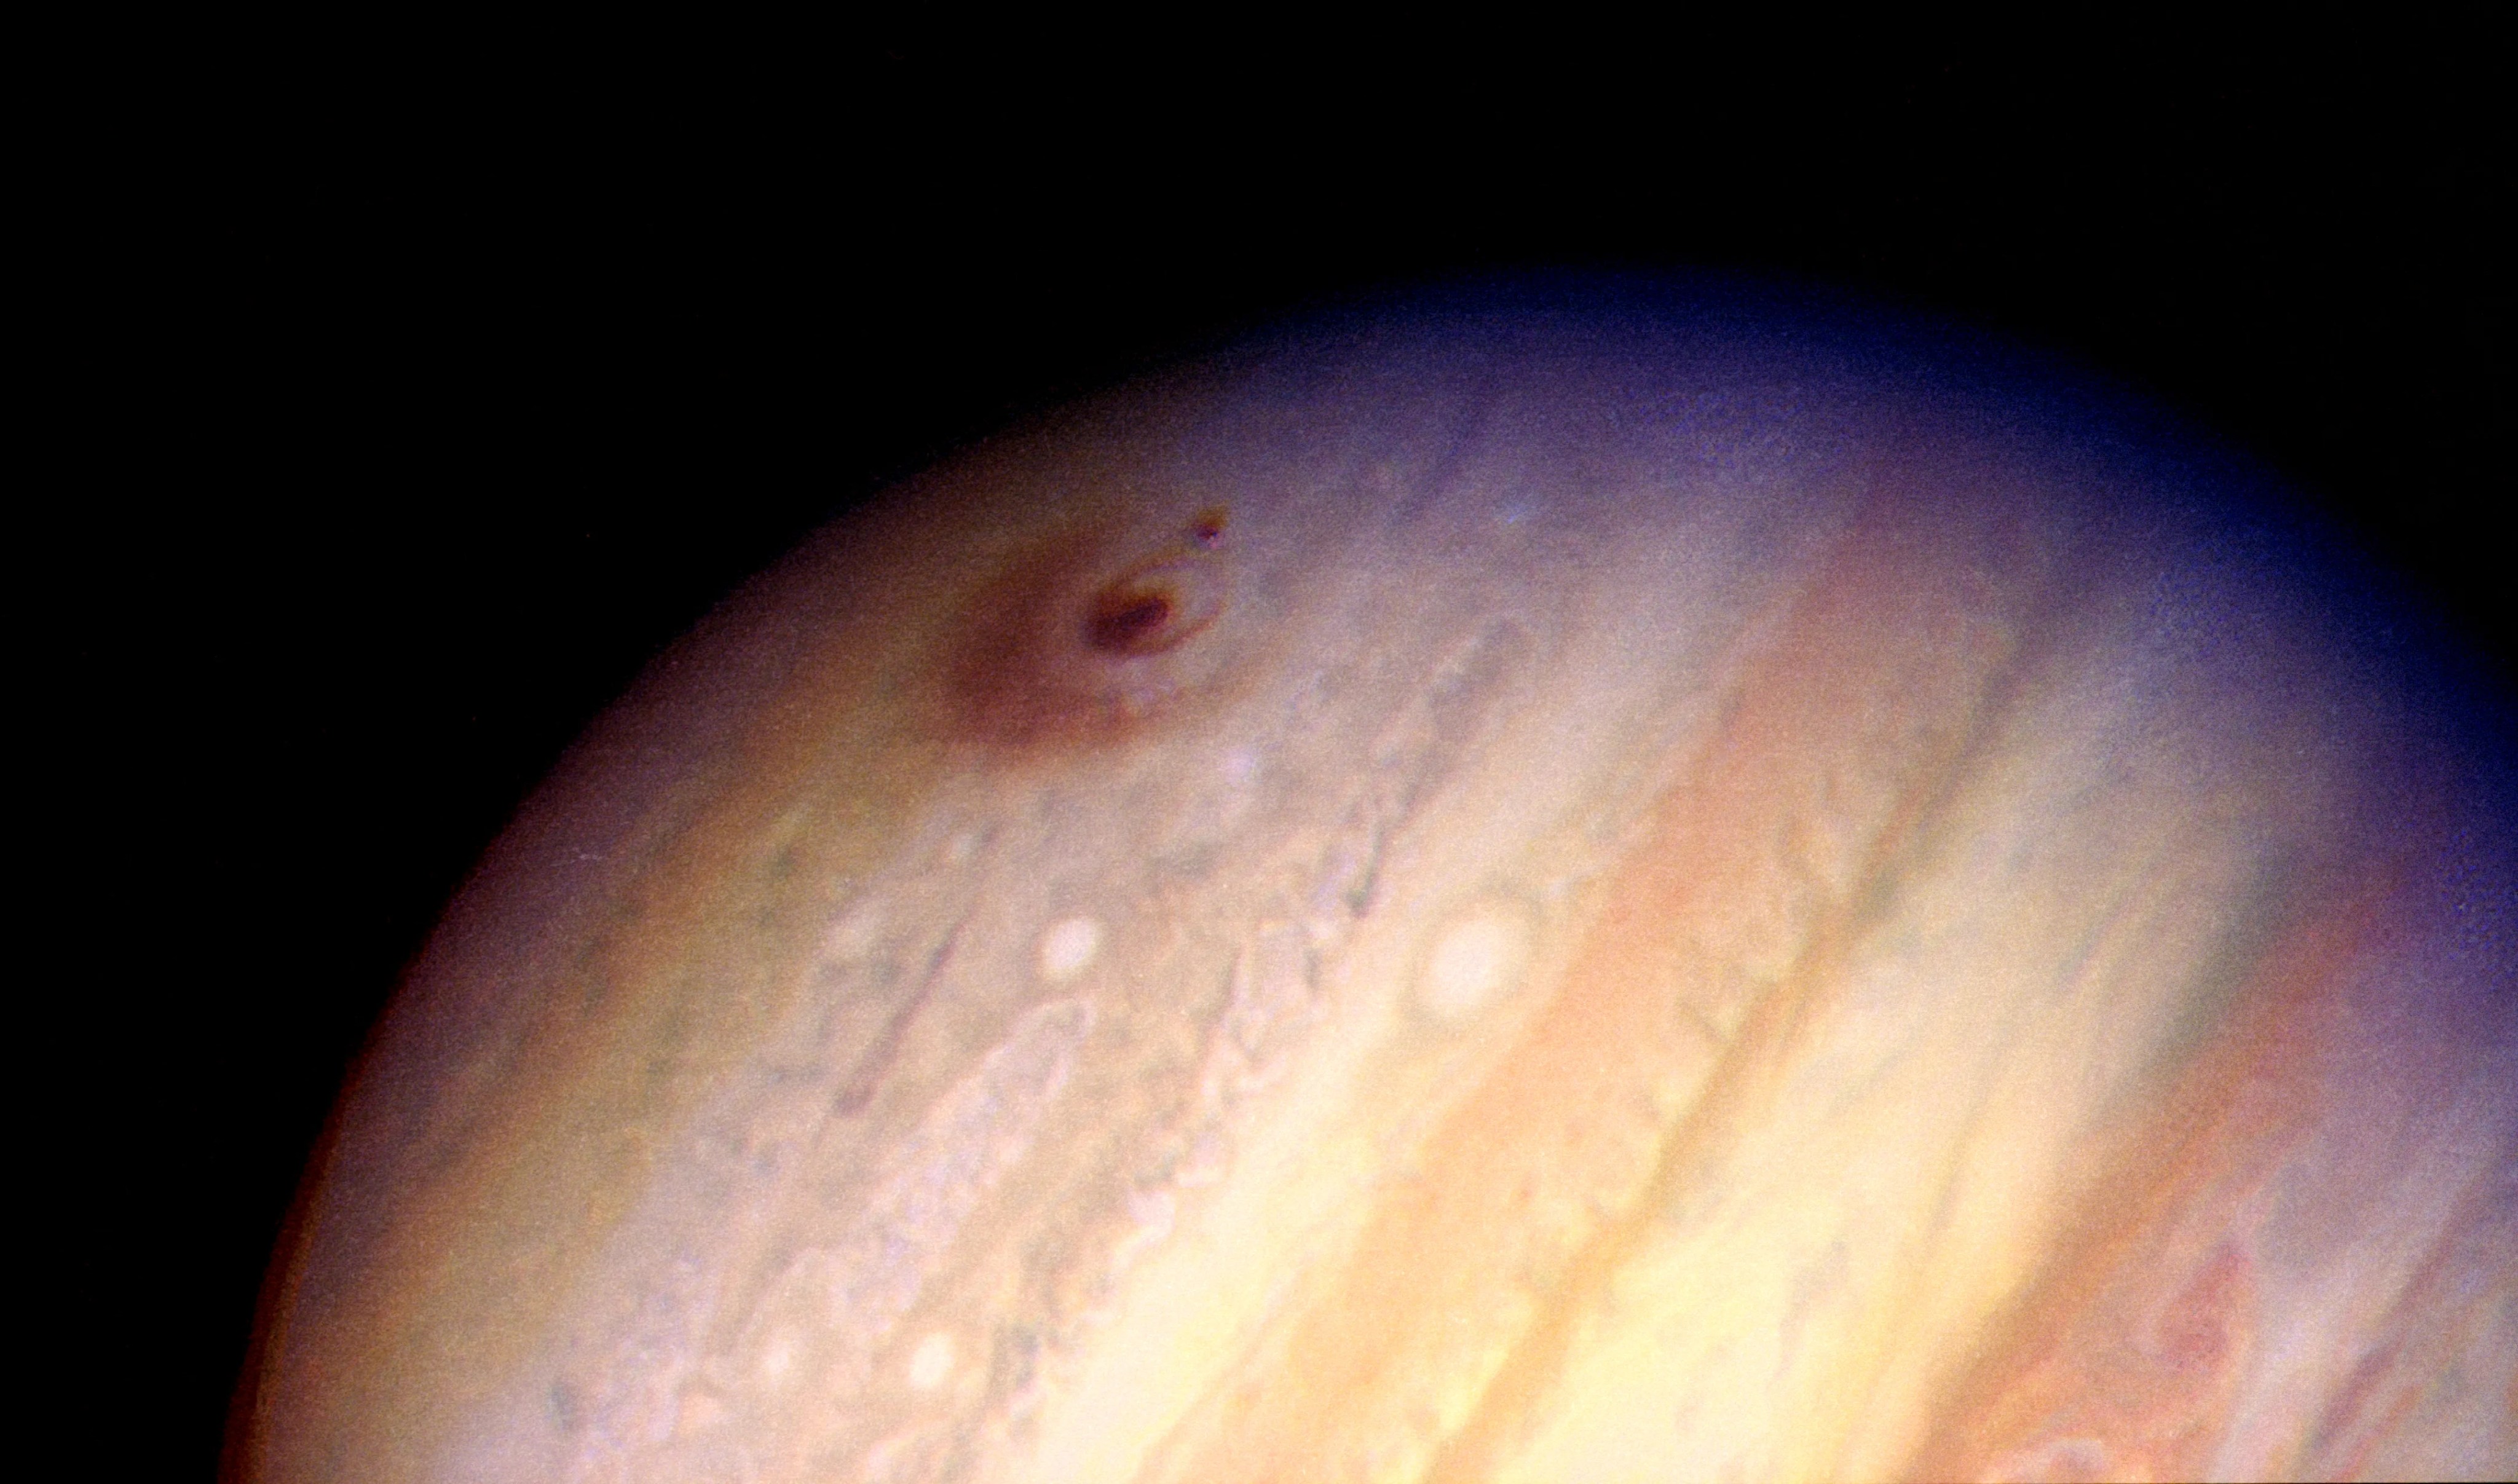 Image of jupiter with dark spot, rings in upper left